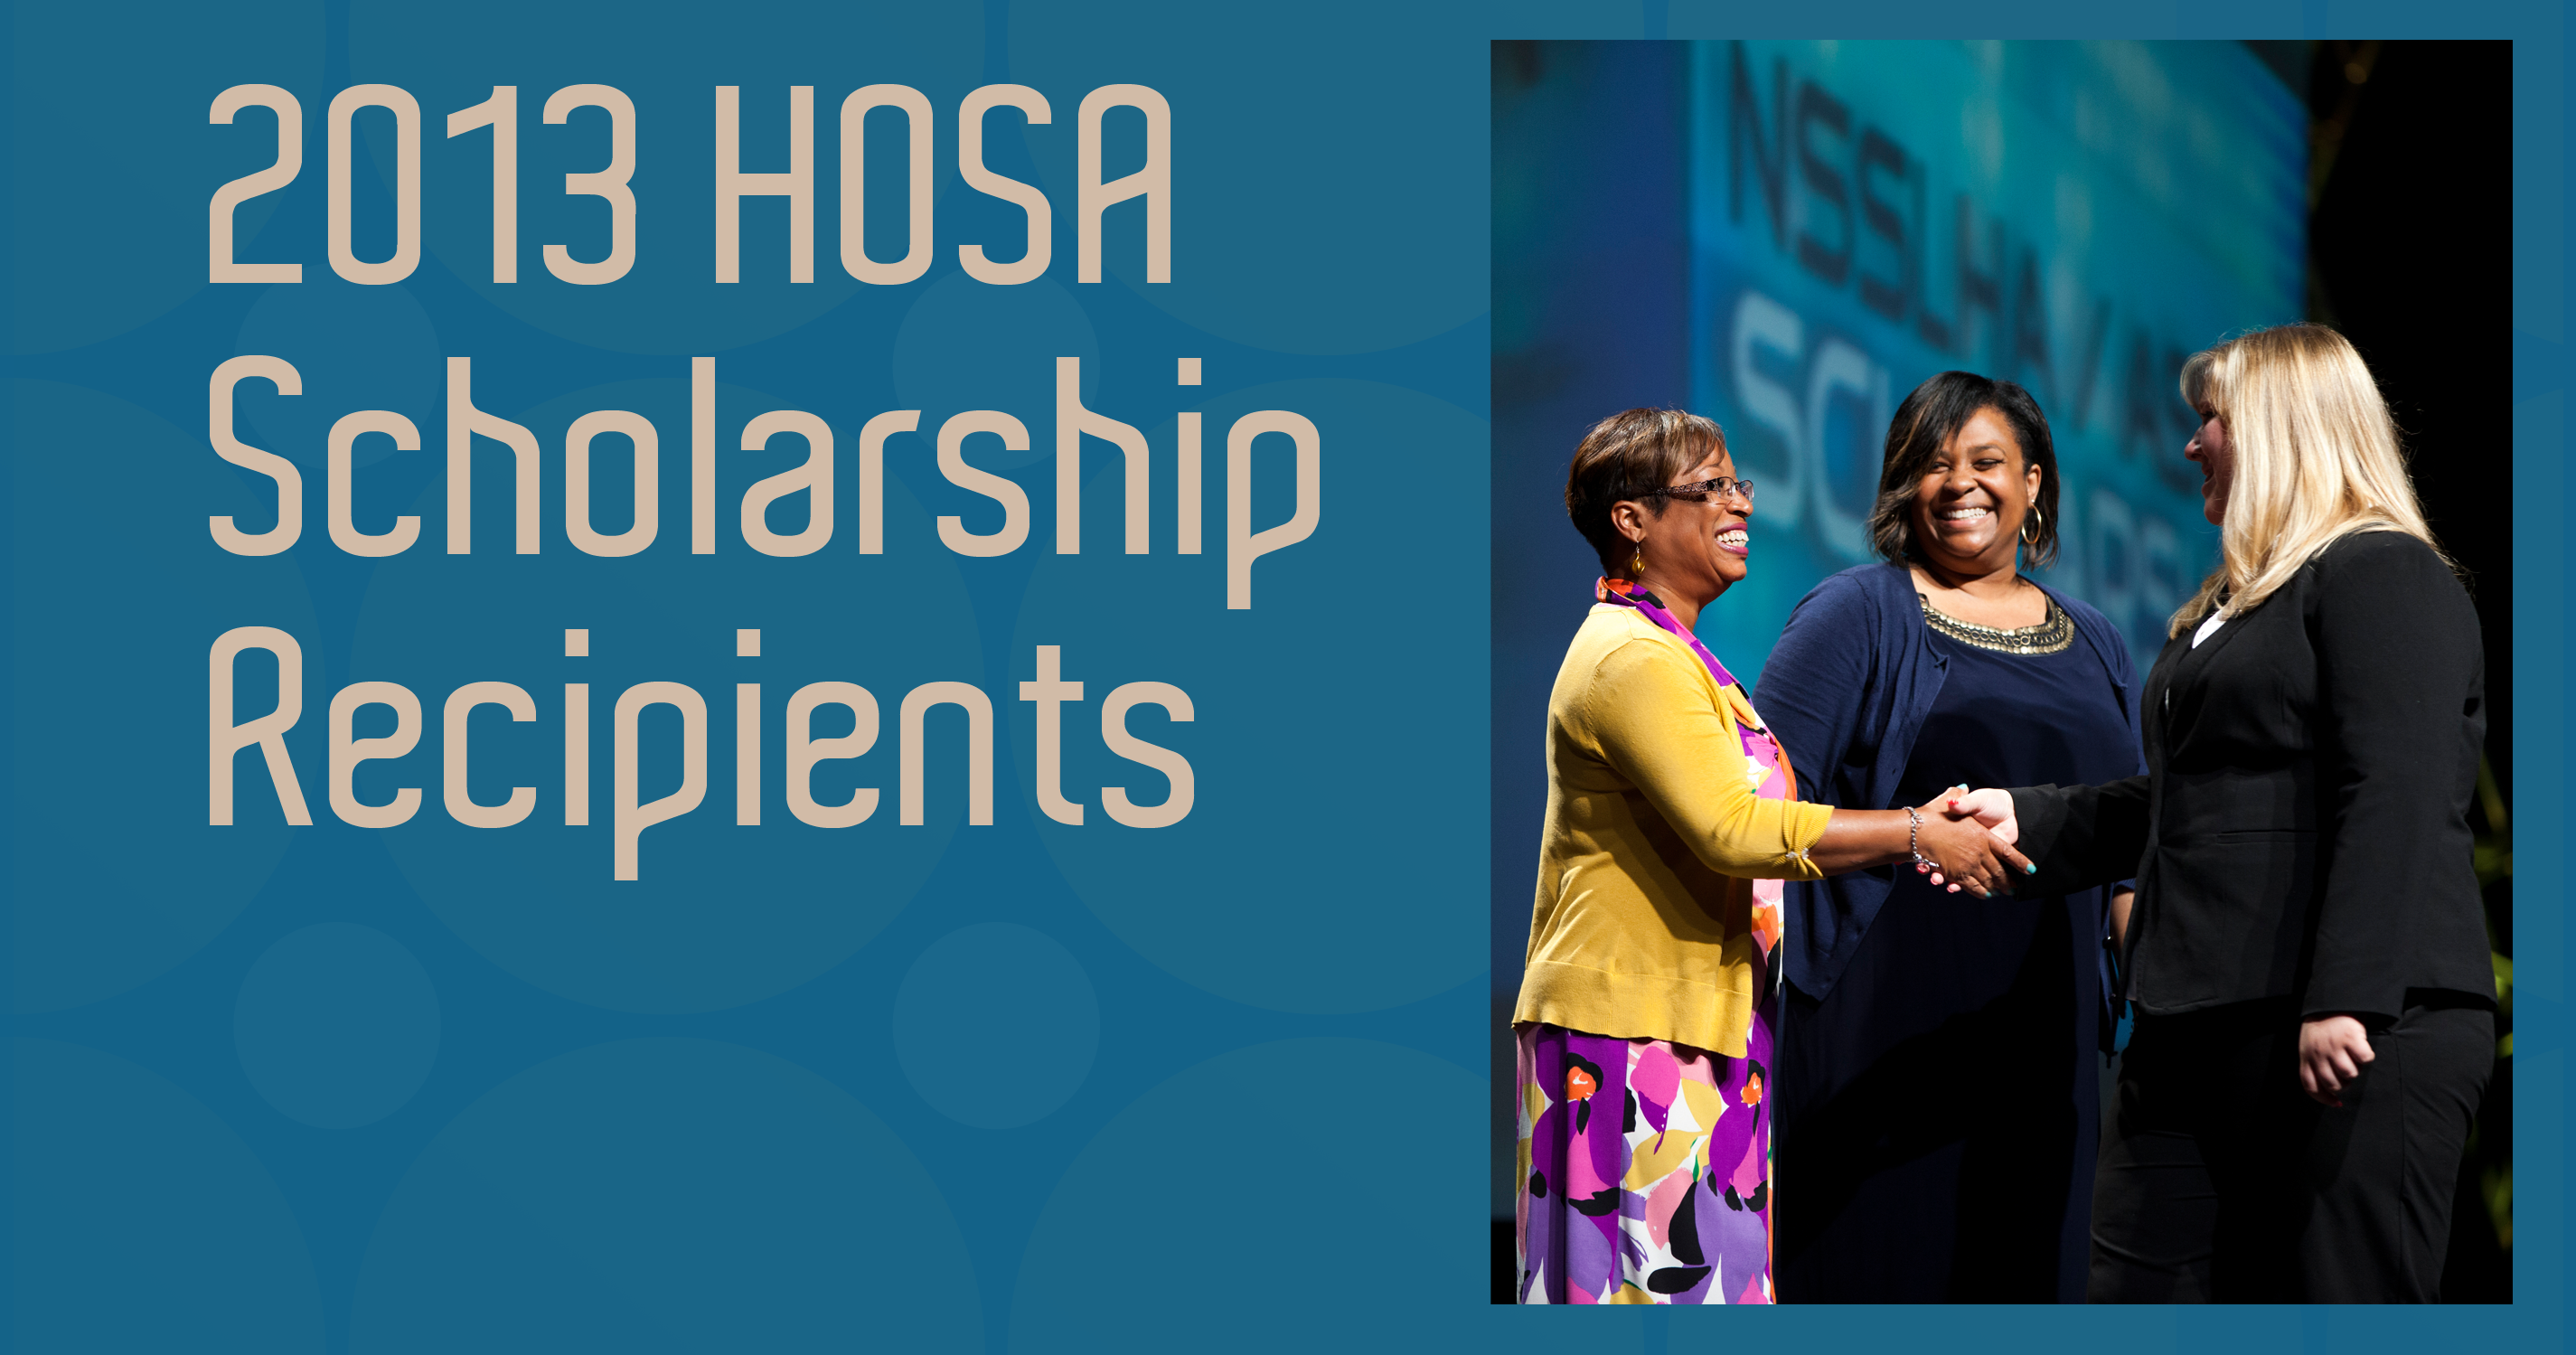 2013 HOSA Scholarship Recipients